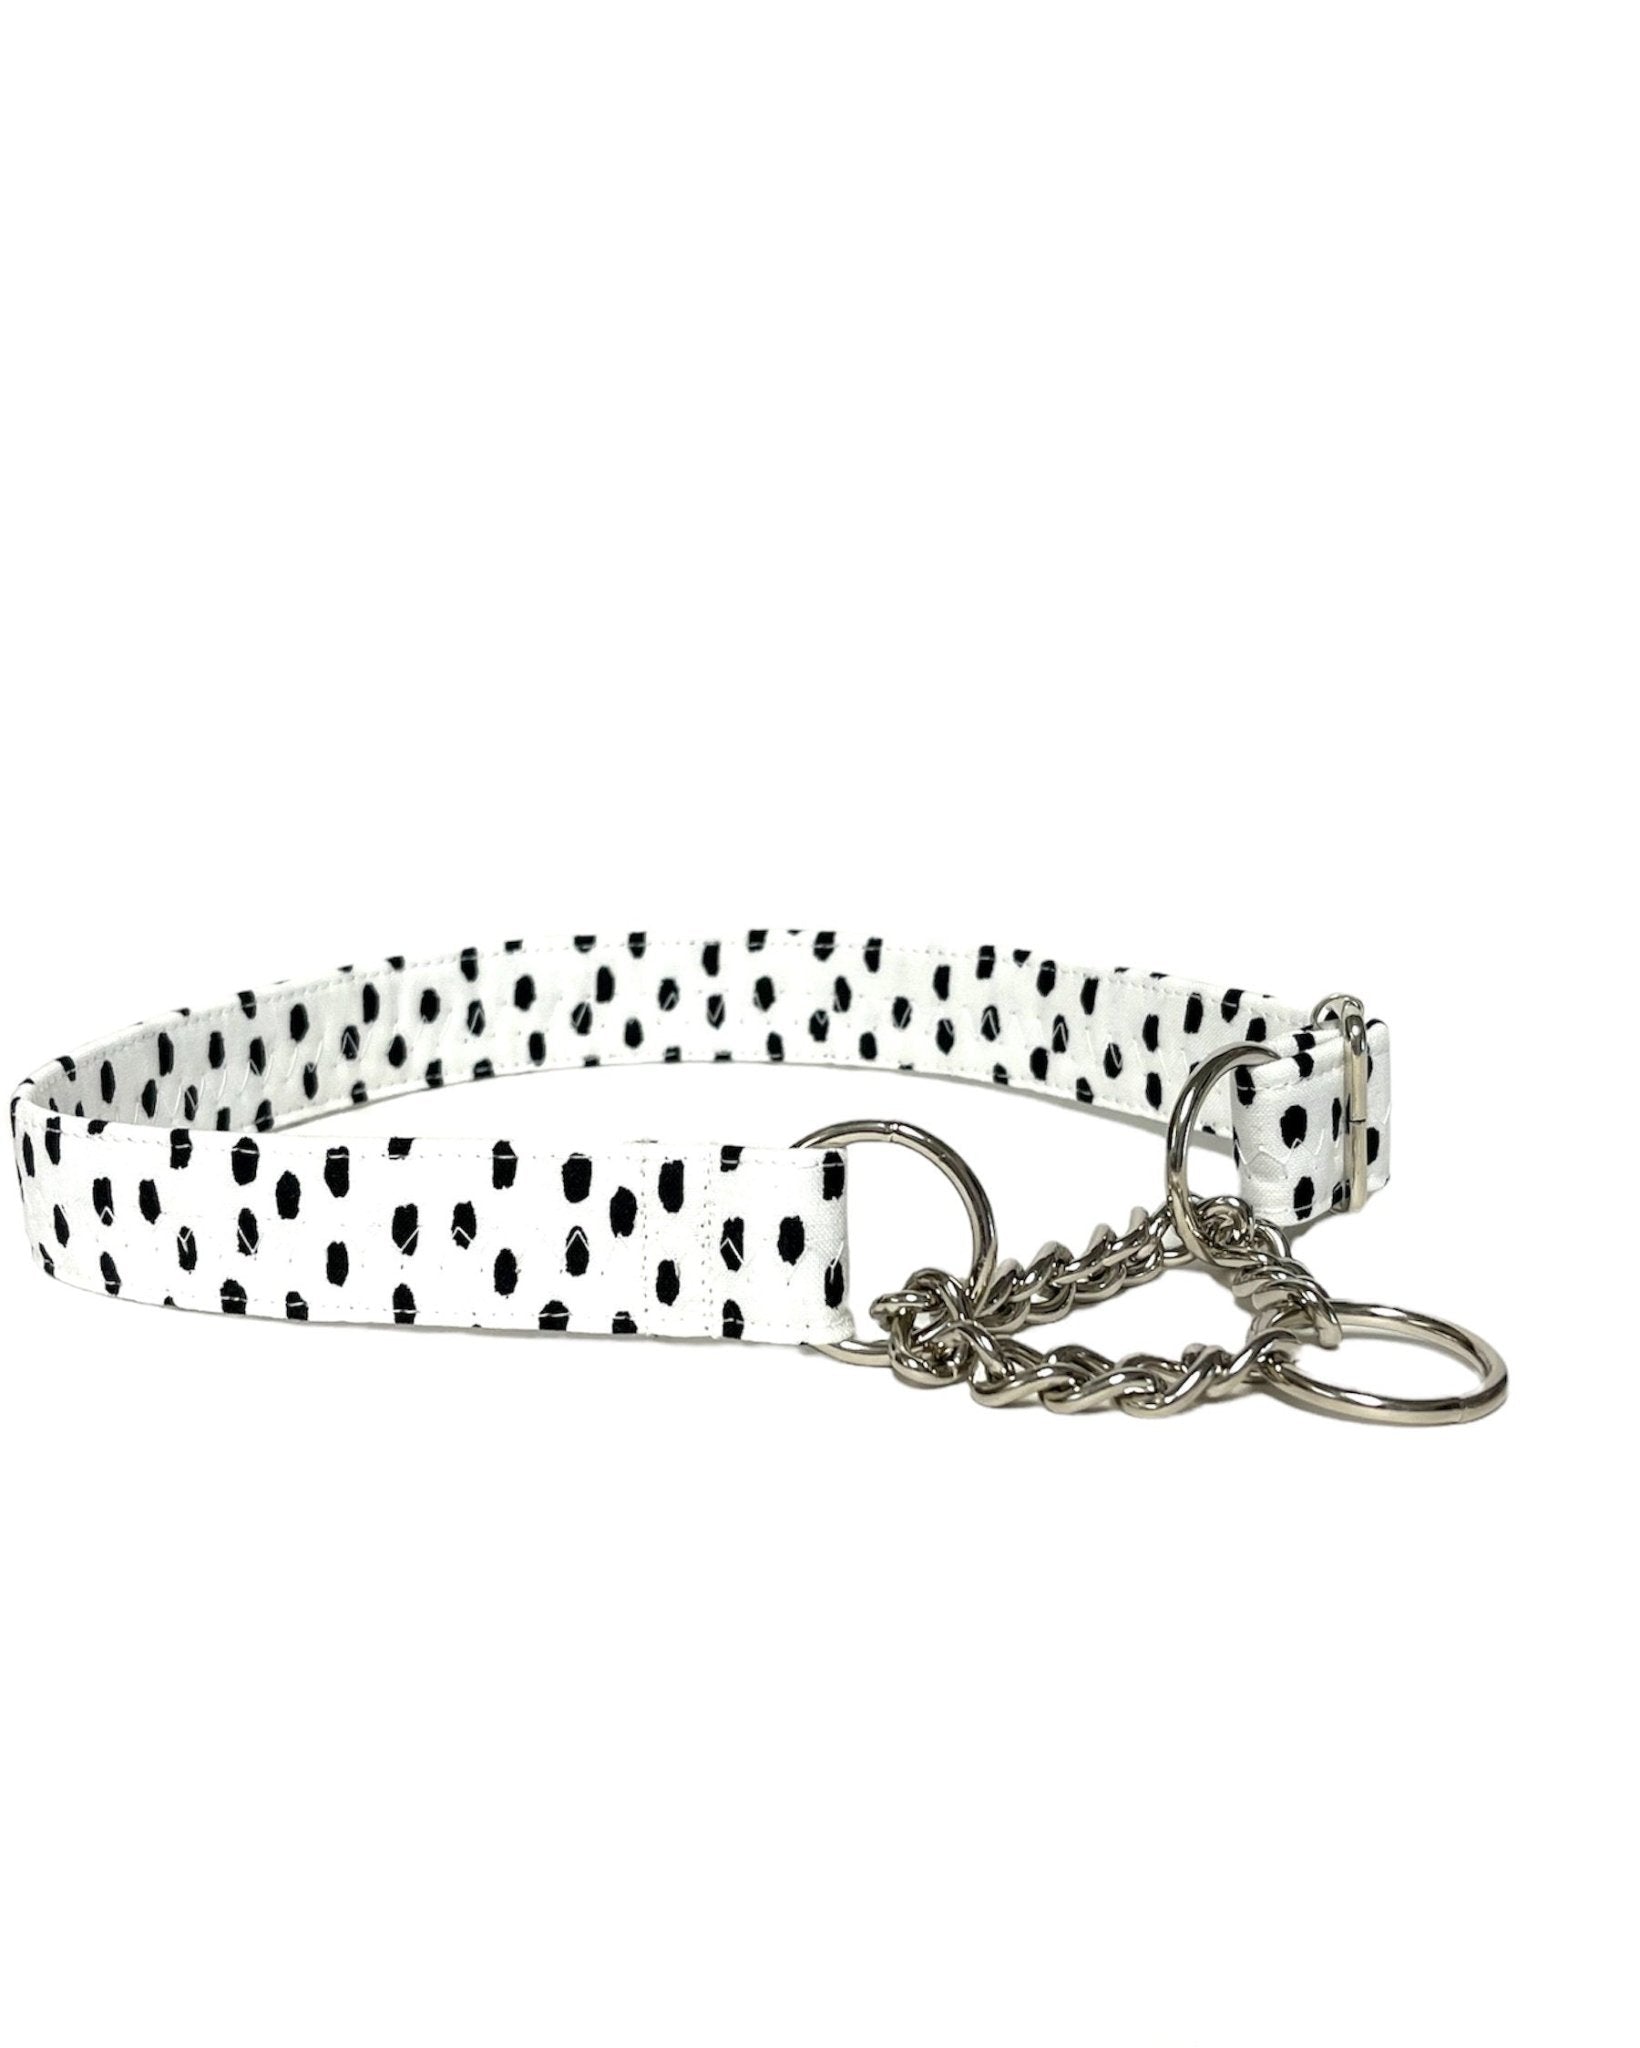 Dalmatian Black Dotty chain Martingale Collar- Fabric style - muttsnbones